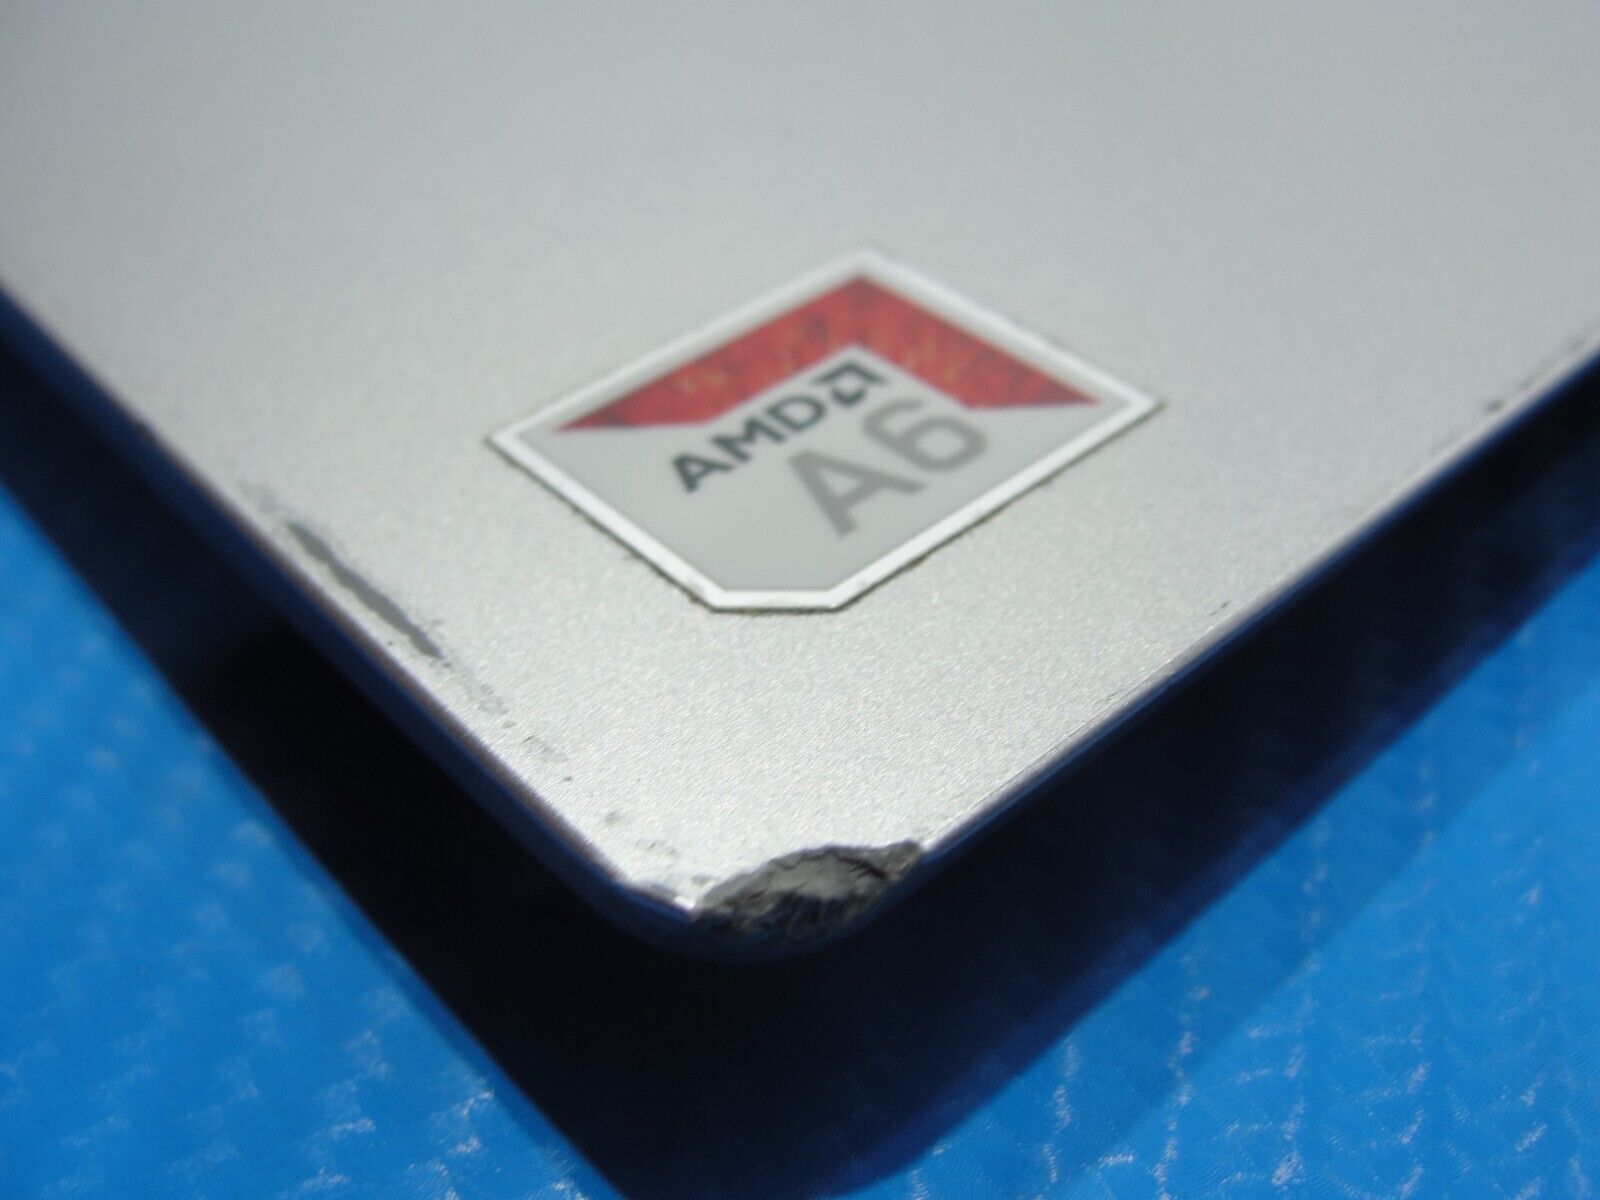 Lenovo IdeaPad Slim 14